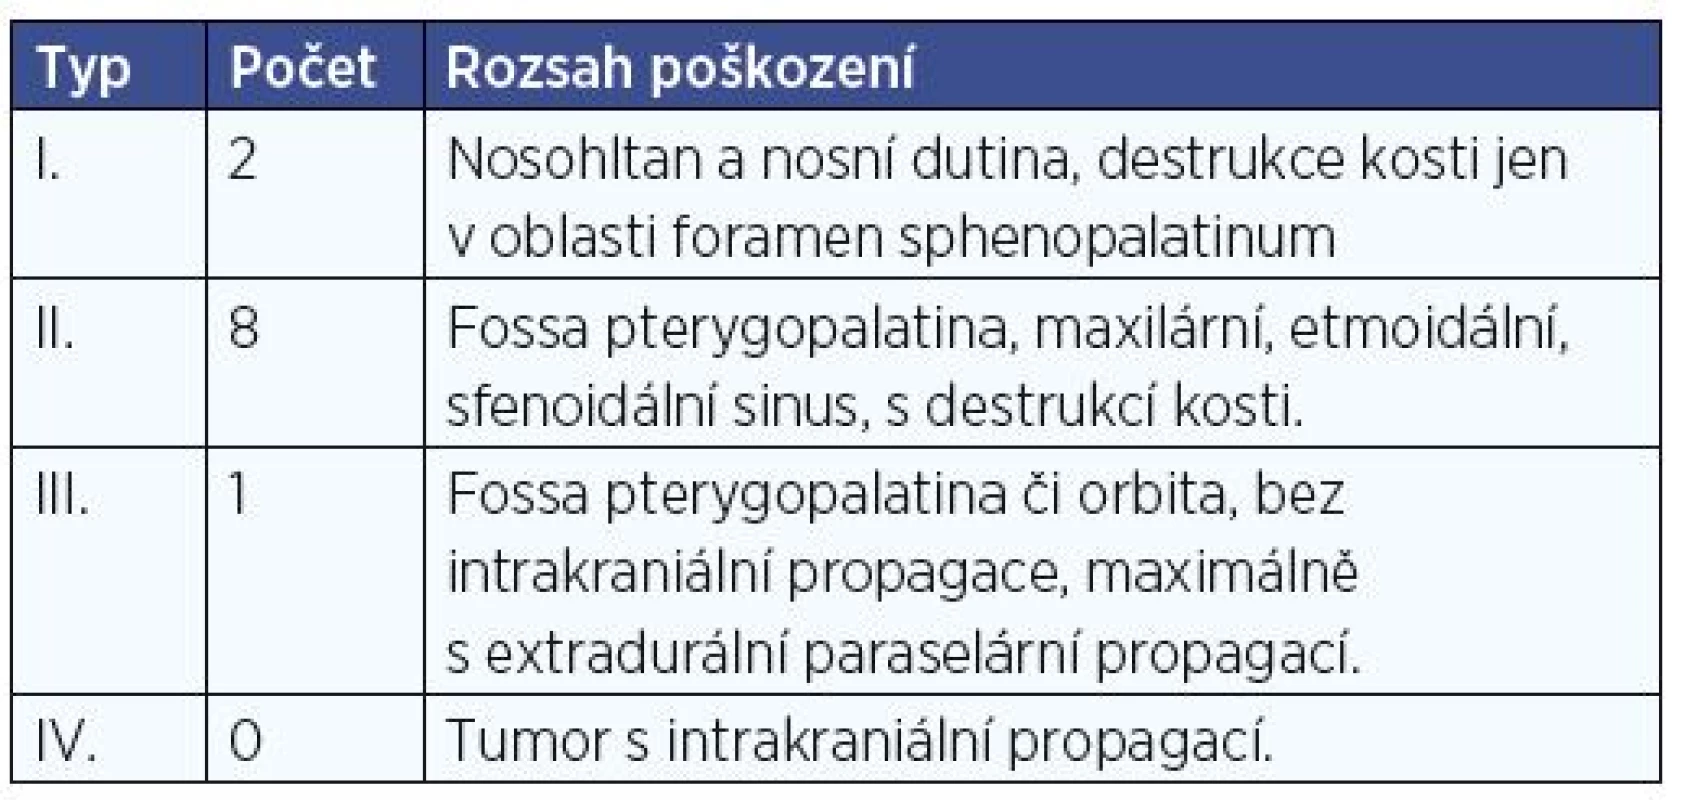 Klasifikace tumoru dle Fische.